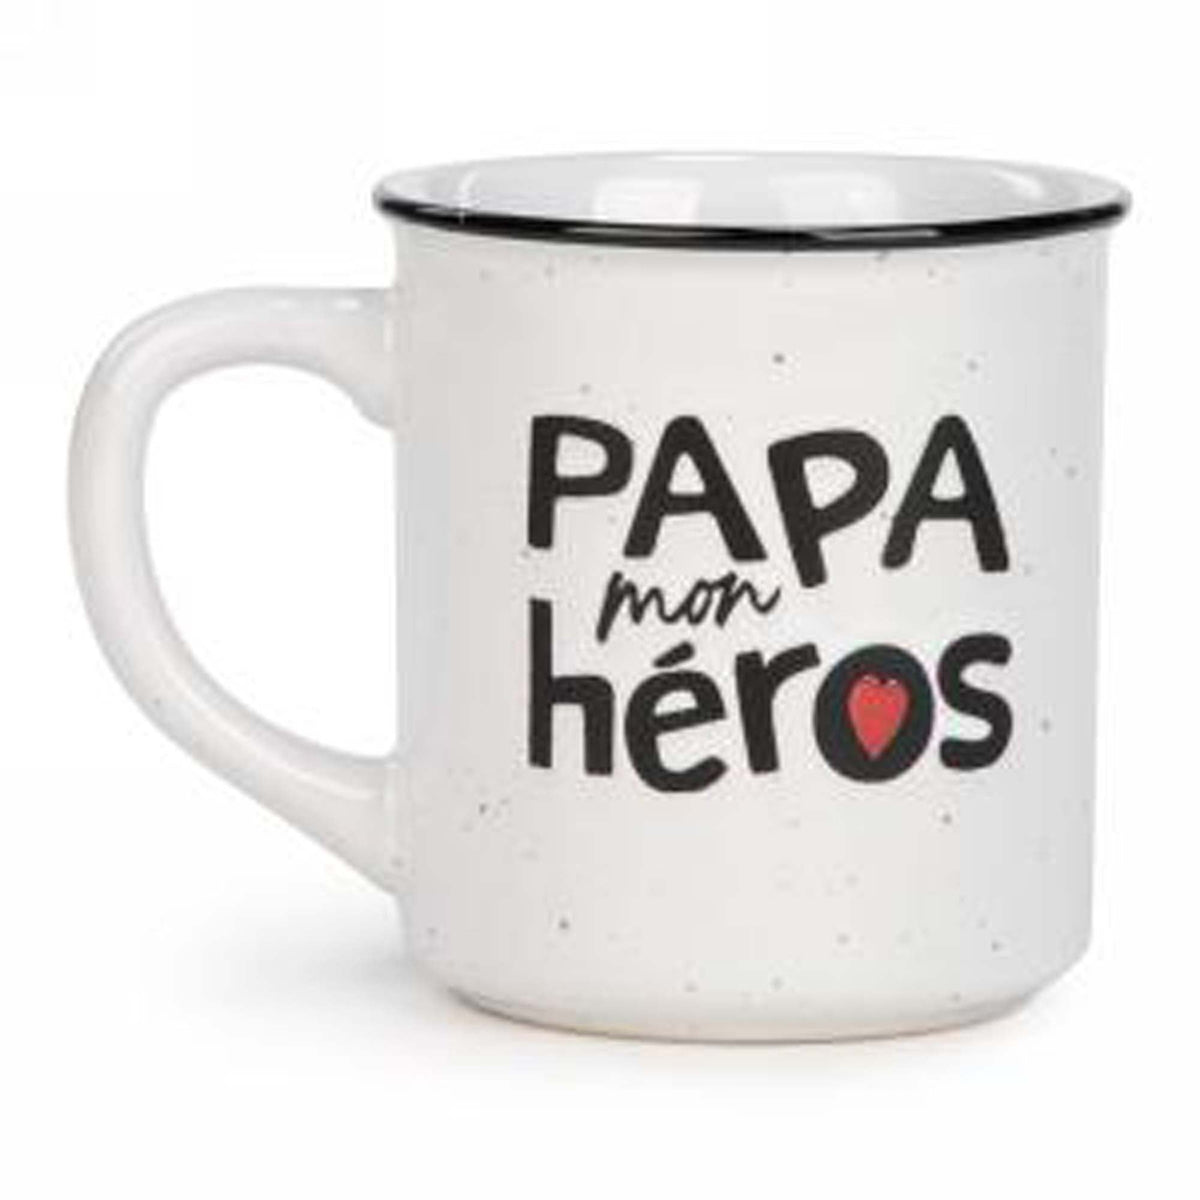 ATTITUDES IMPORT Novelties White Mug "Papa mon héros", 1 Count